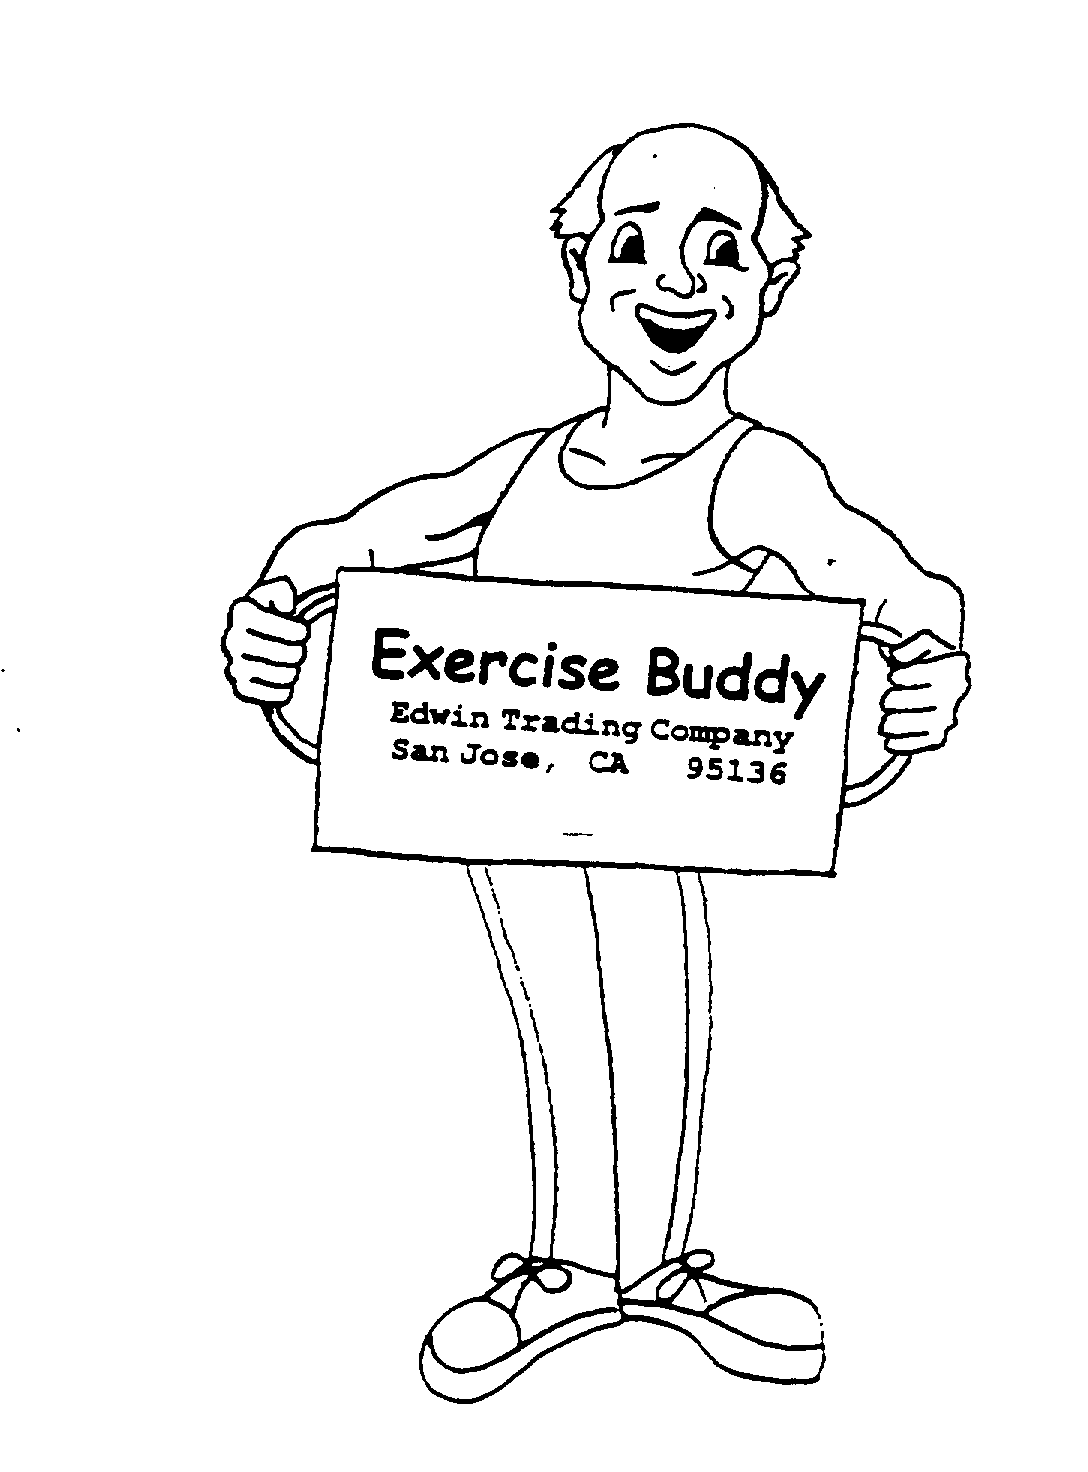  EXERCISE BUDDY EDWIN TRADING COMPANY SAN JOSE, CA 95136